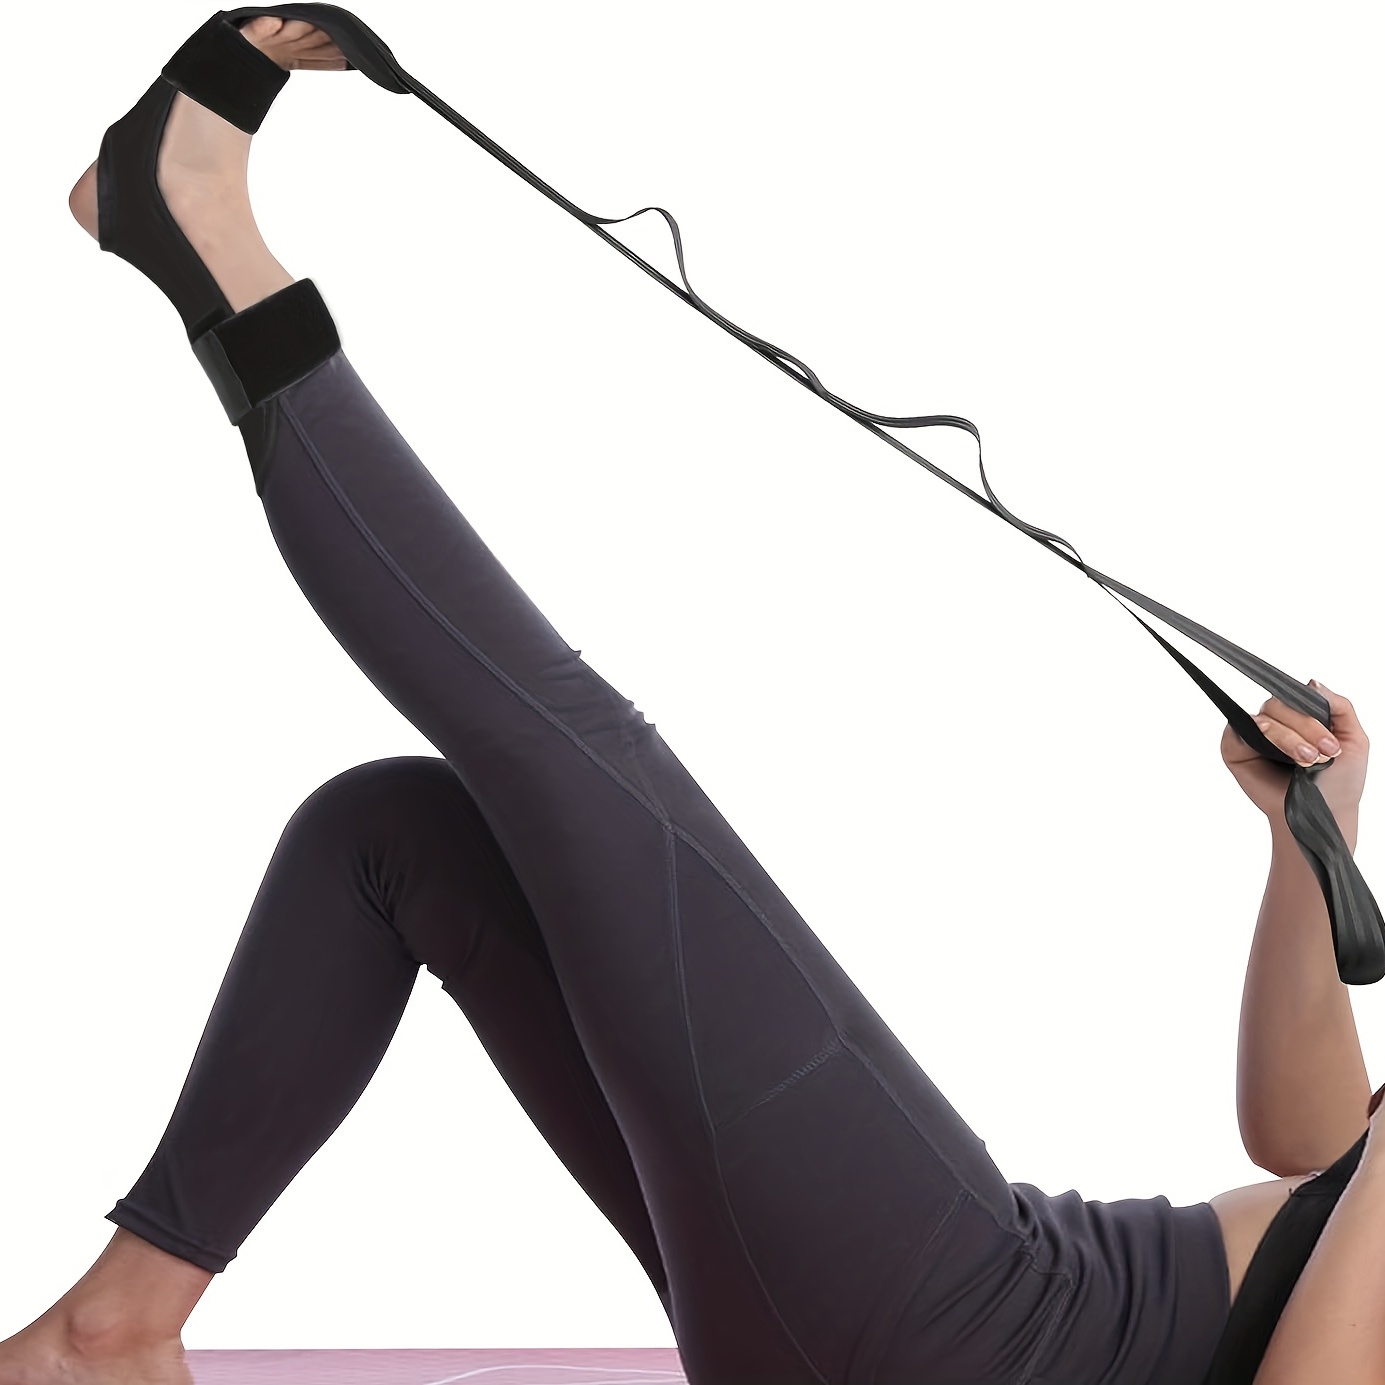 Yoga Stretching Belt, Ligament Stretching Belt, Leg Correction